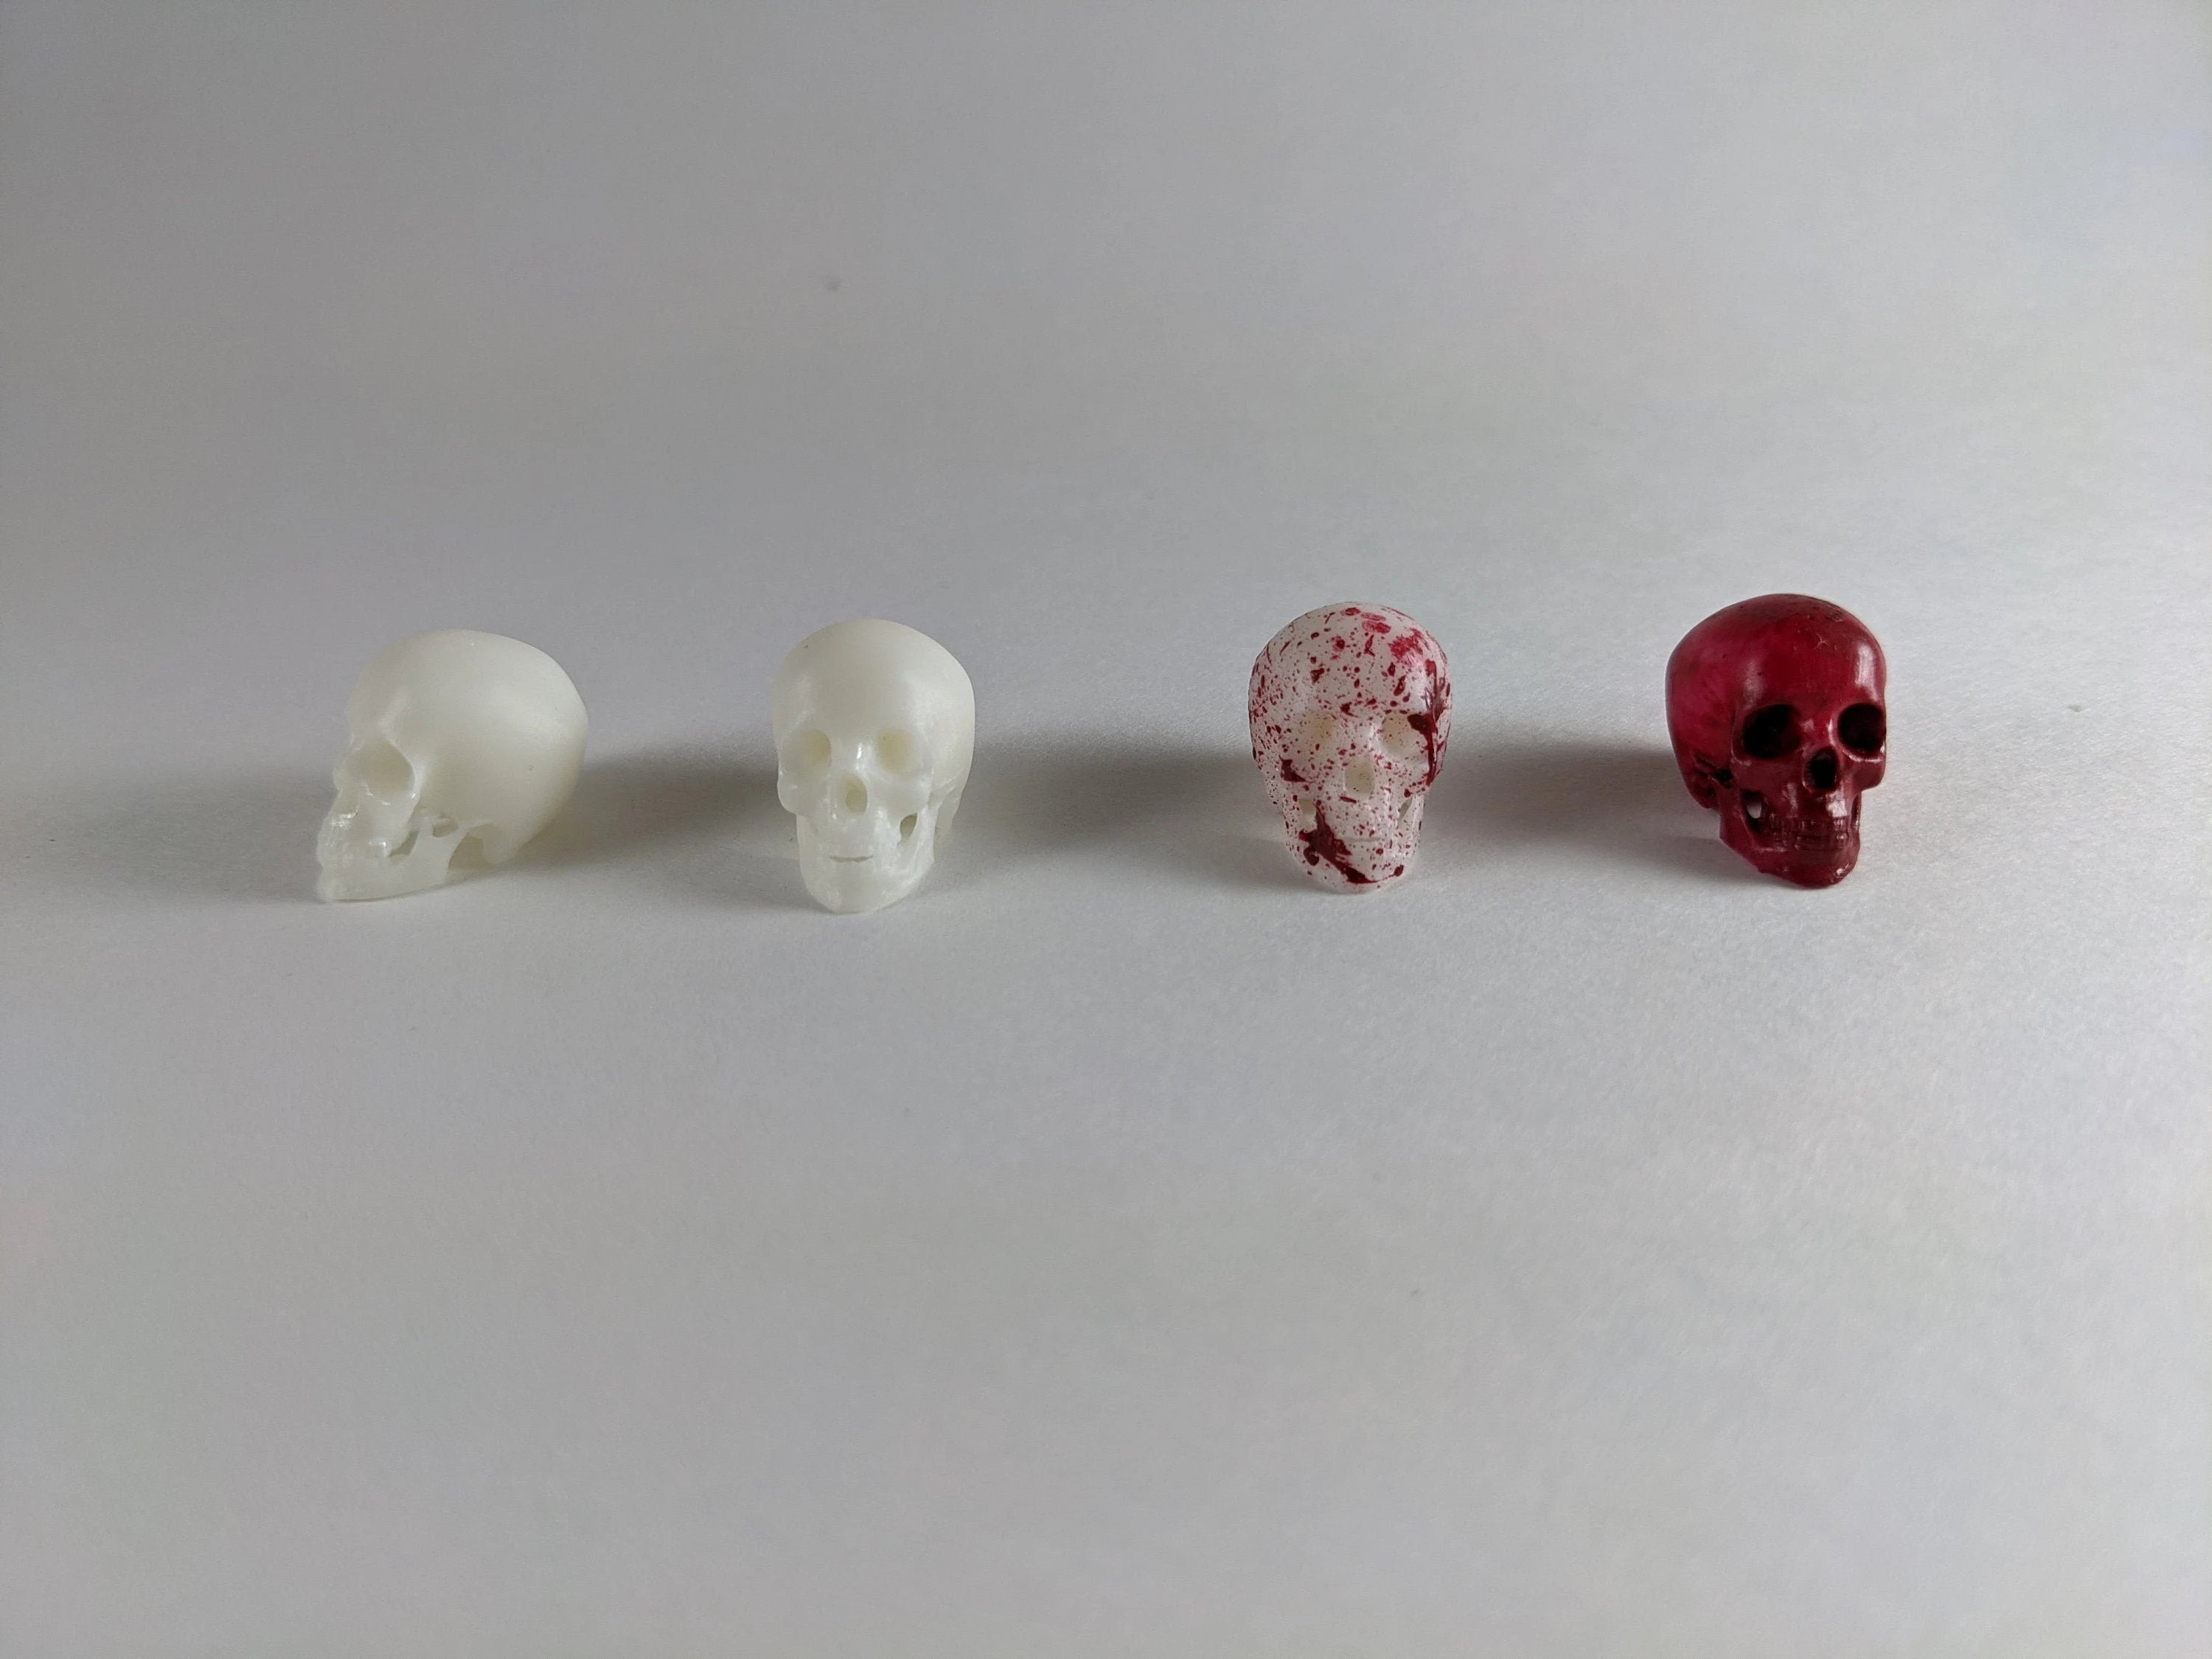 Skulls for Trial by Trolley